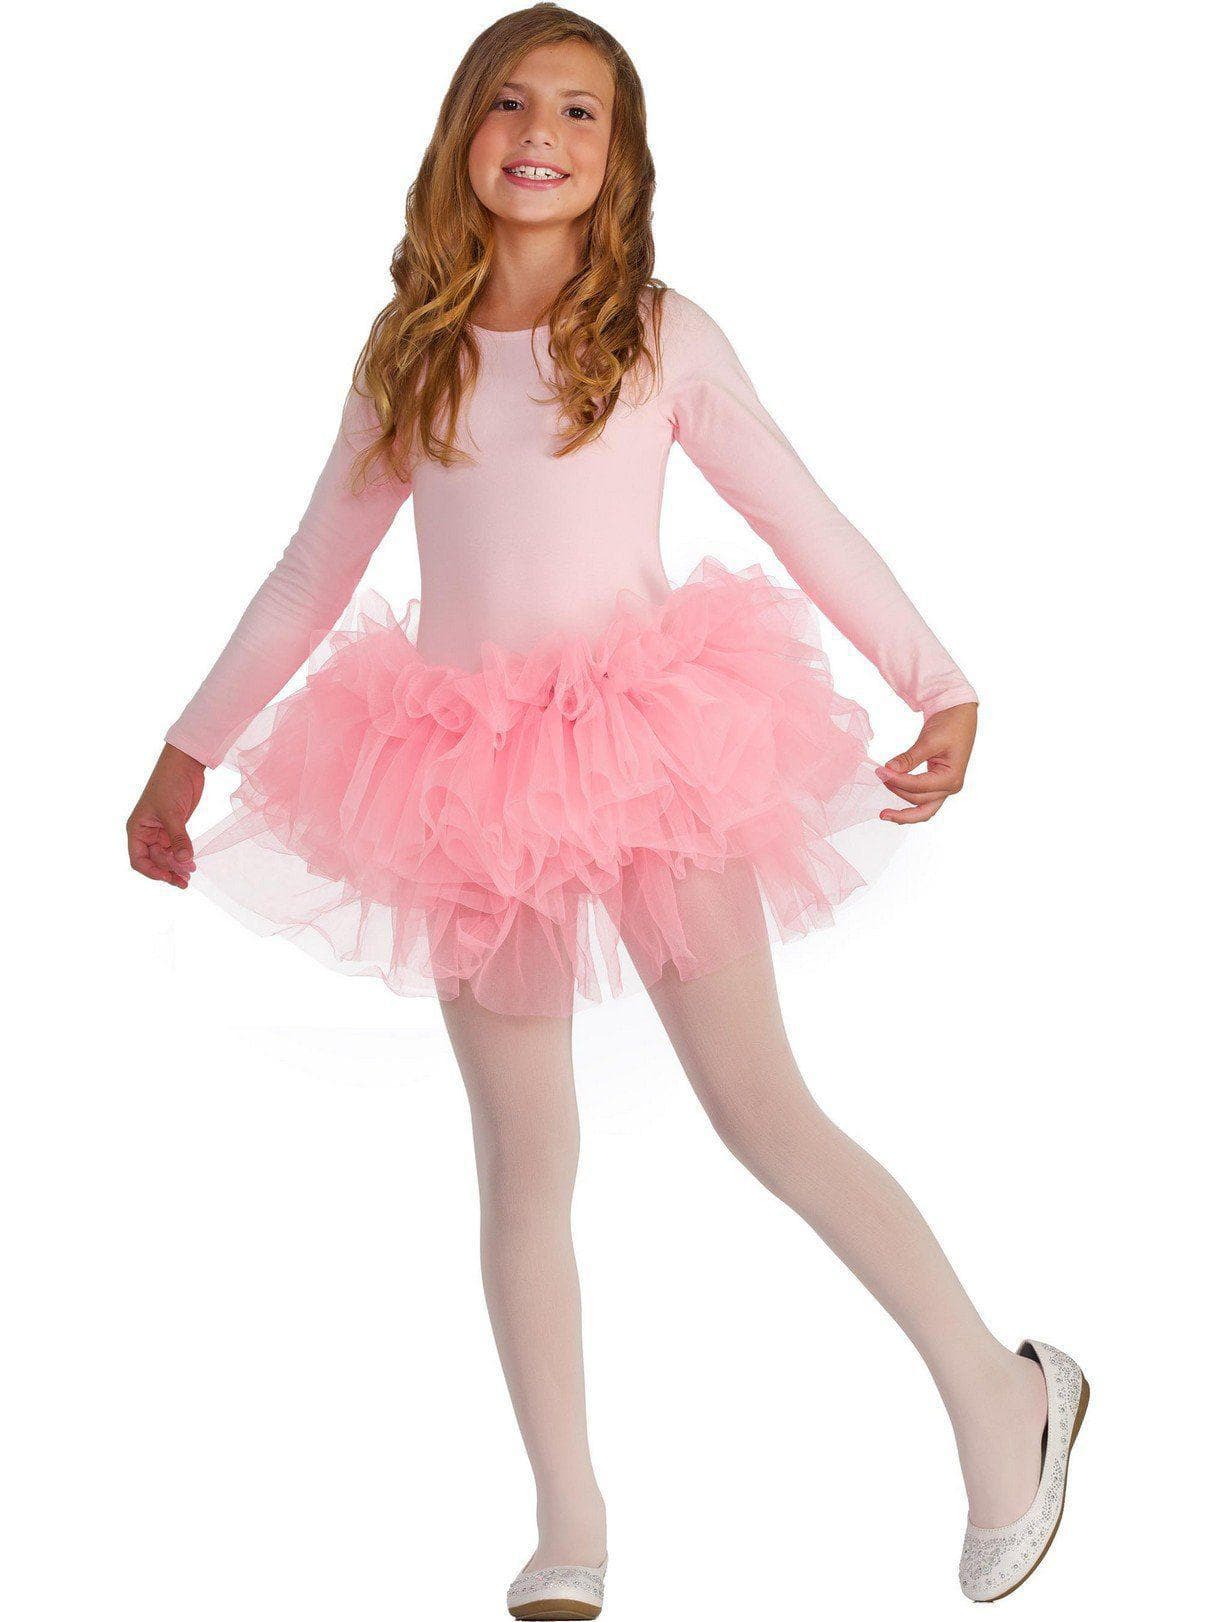 Girls' Pink Tutu - costumes.com